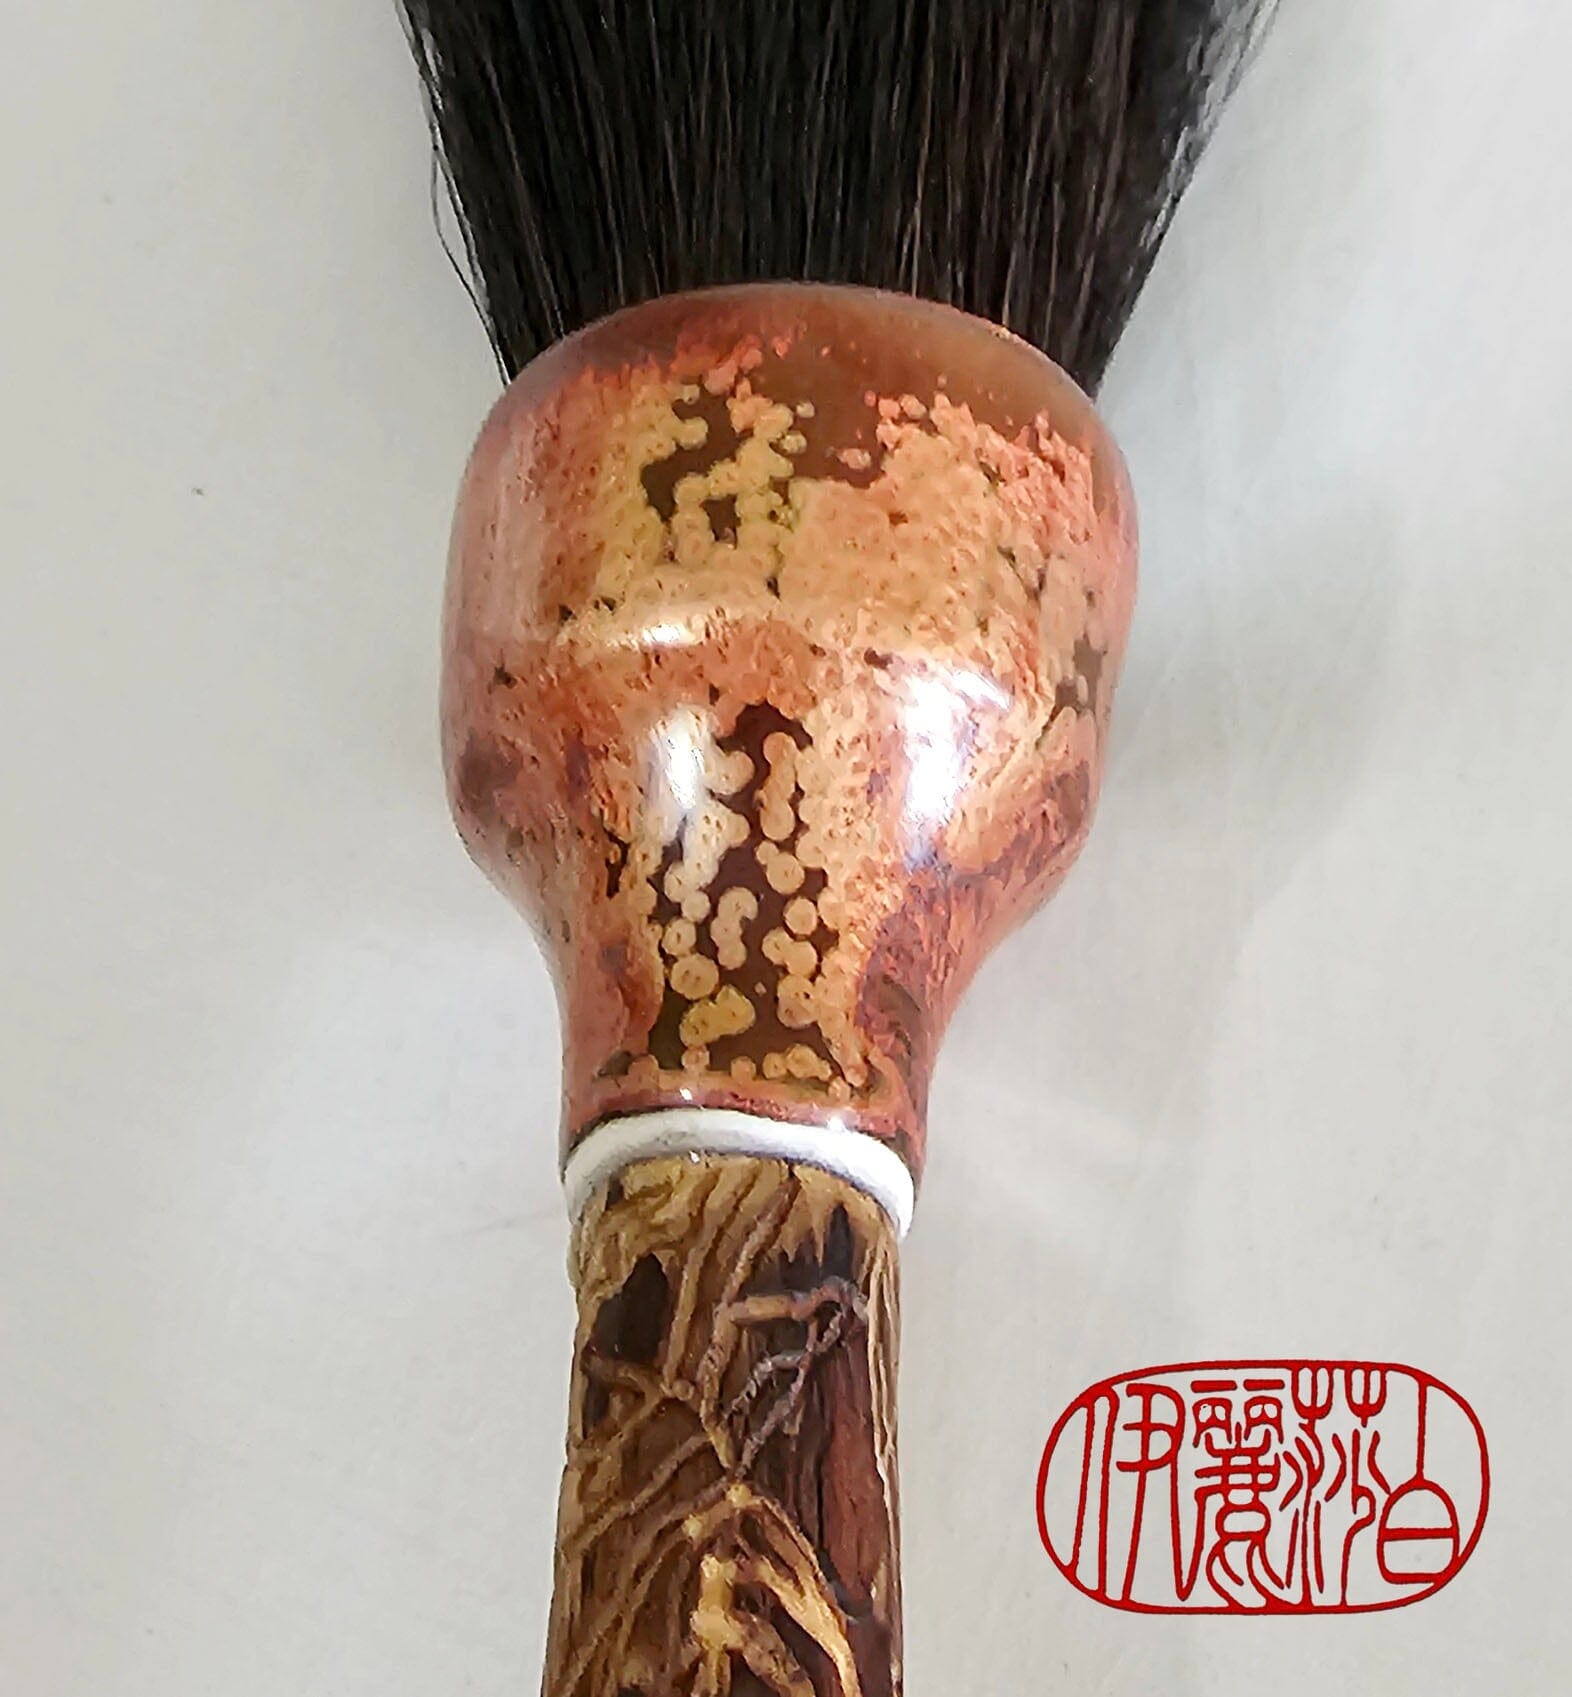 Black Horsehair Sumi-e Paint Brush With Ceramic Ferrule Art Supplies Elizabeth Schowachert Art